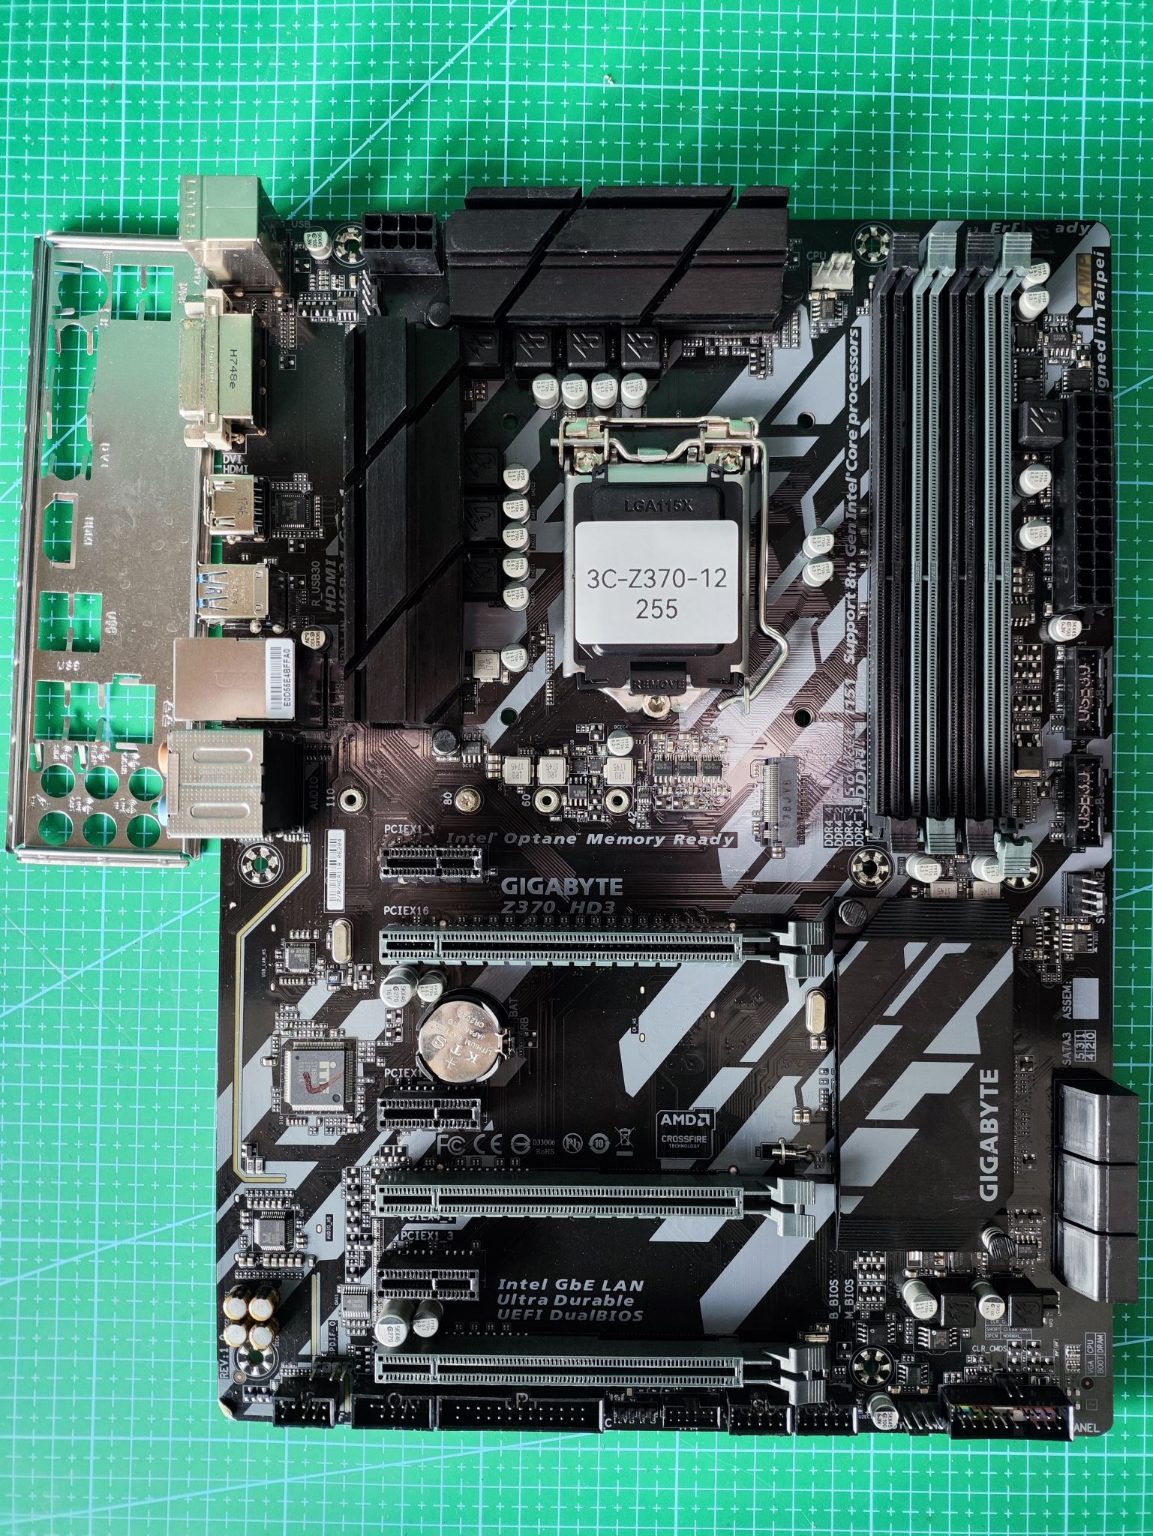 # GIGABYTE Z370 Motherboard # LGA 1151 Intel 8Gen 9Gen / USB3.0 / H310 B360 B365